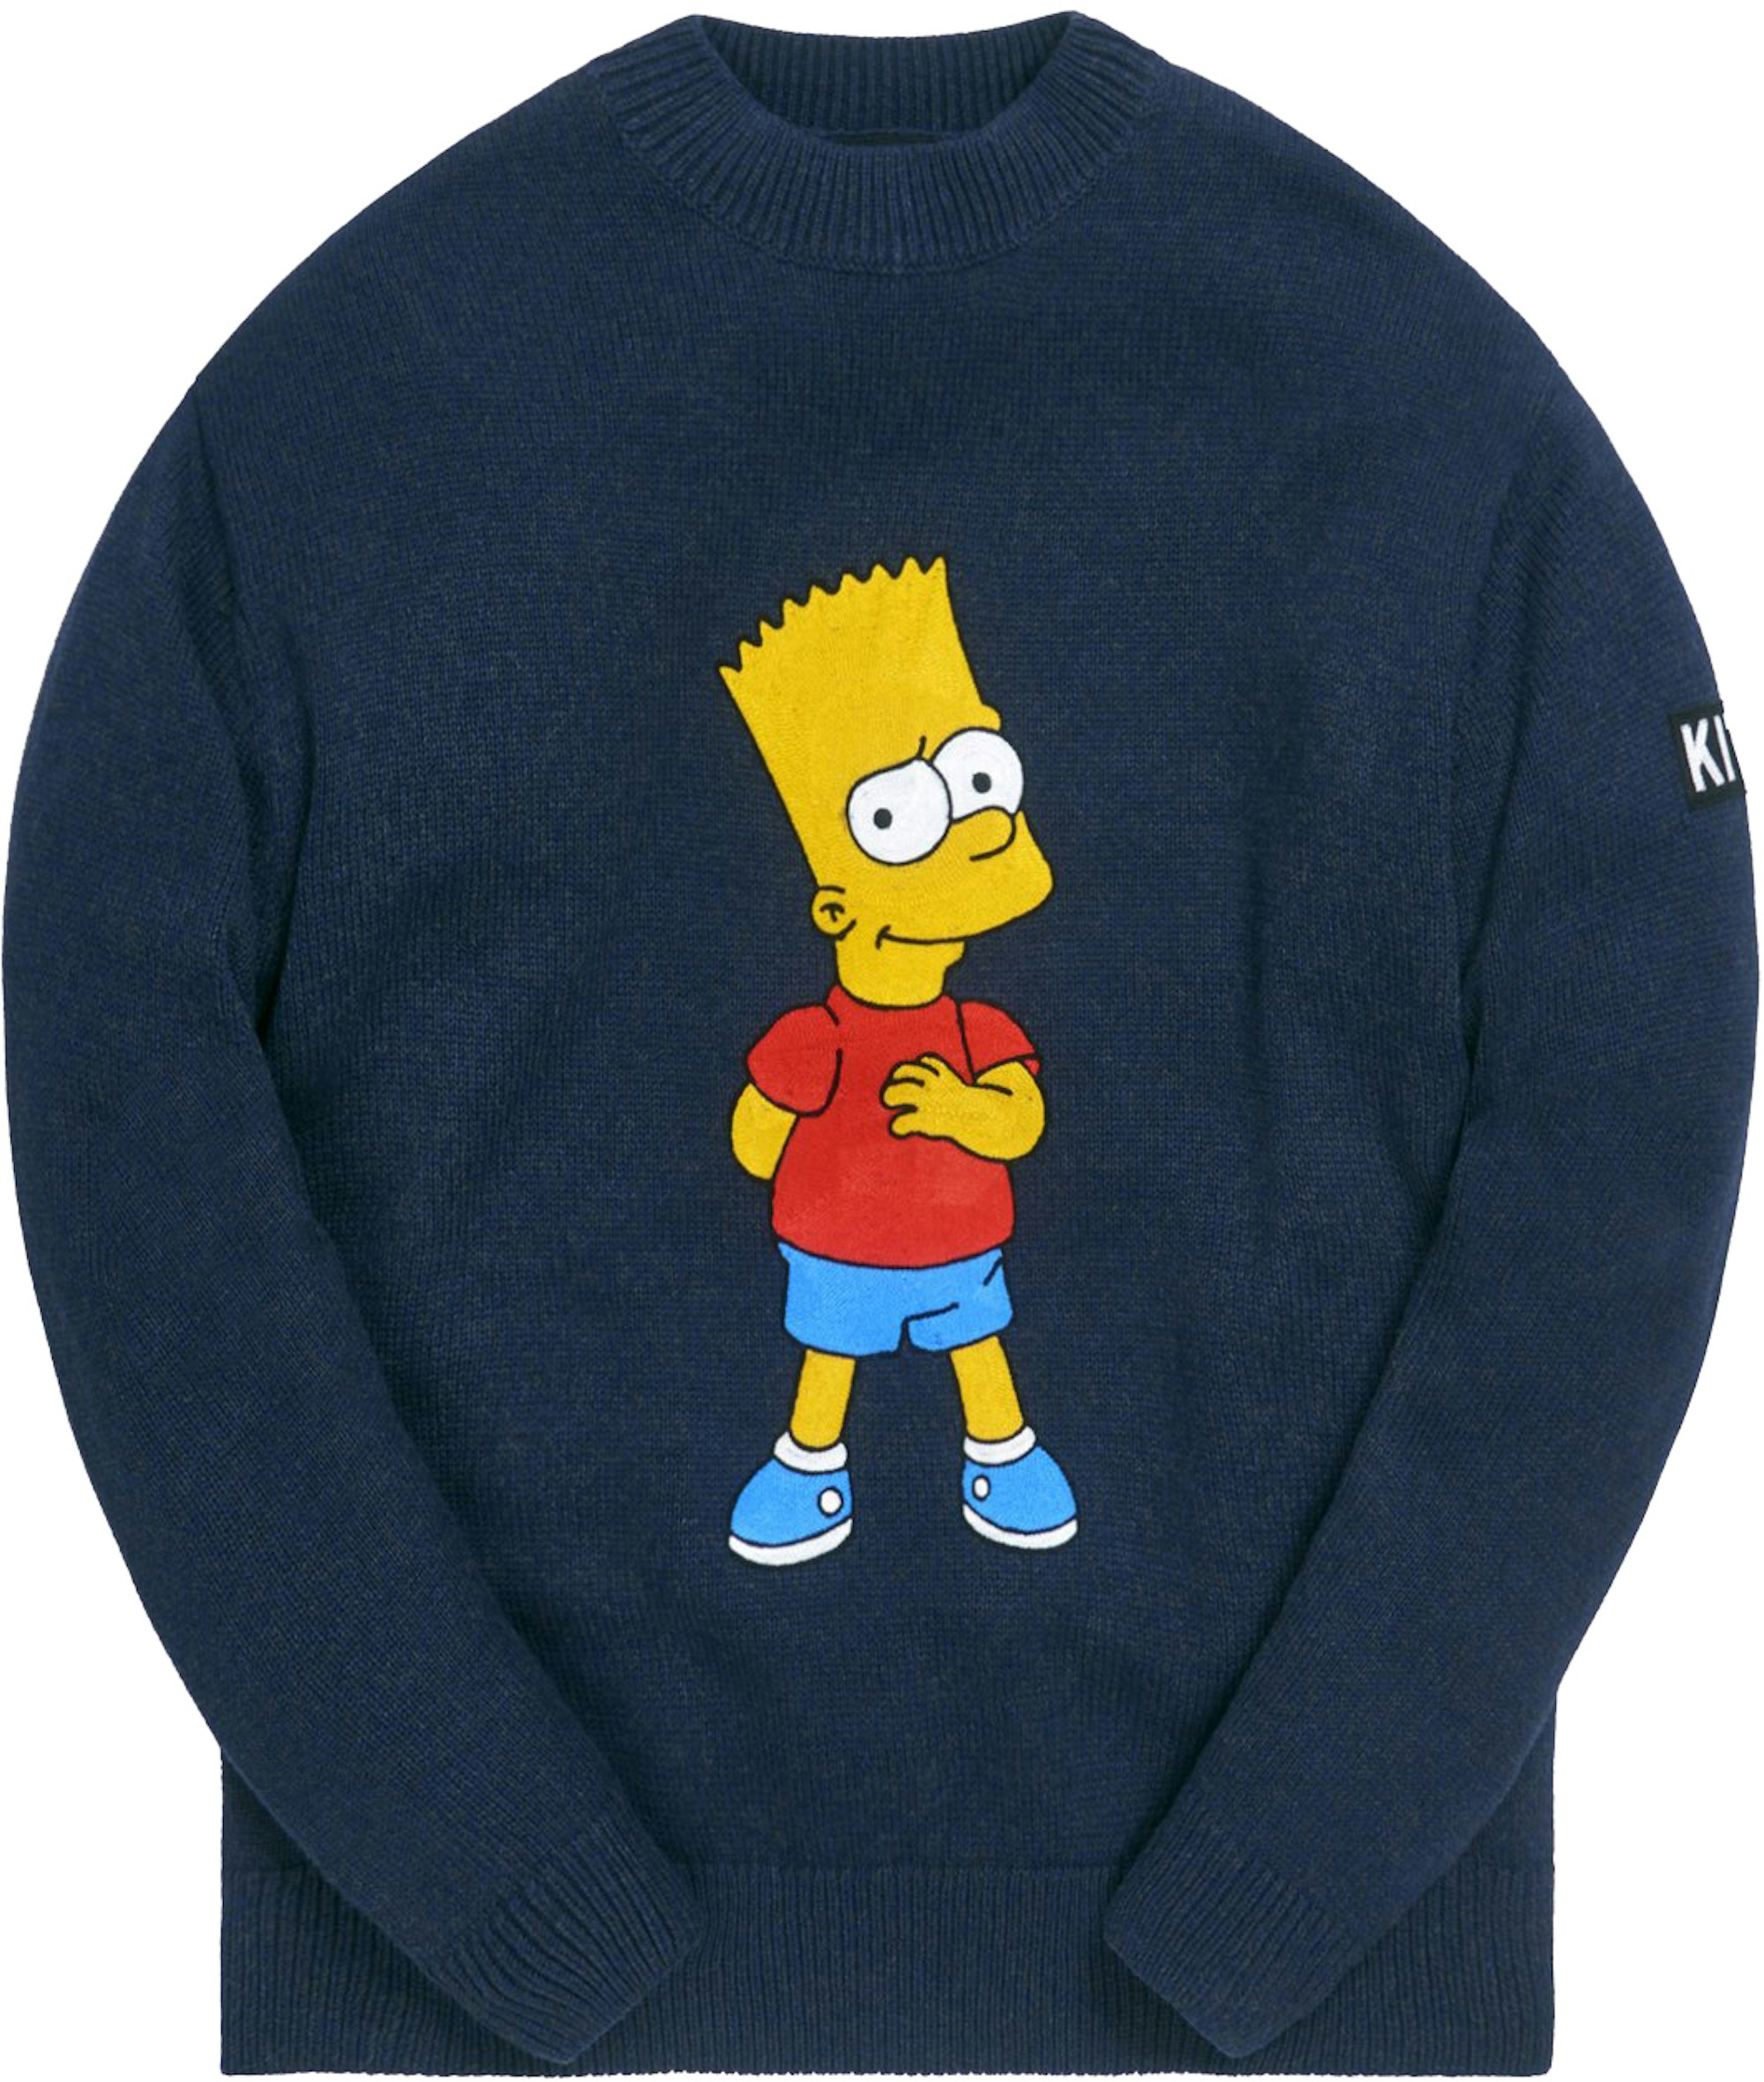 Kith x The Simpsons Bart Intarsia Sweater Navy/Multi - SS21